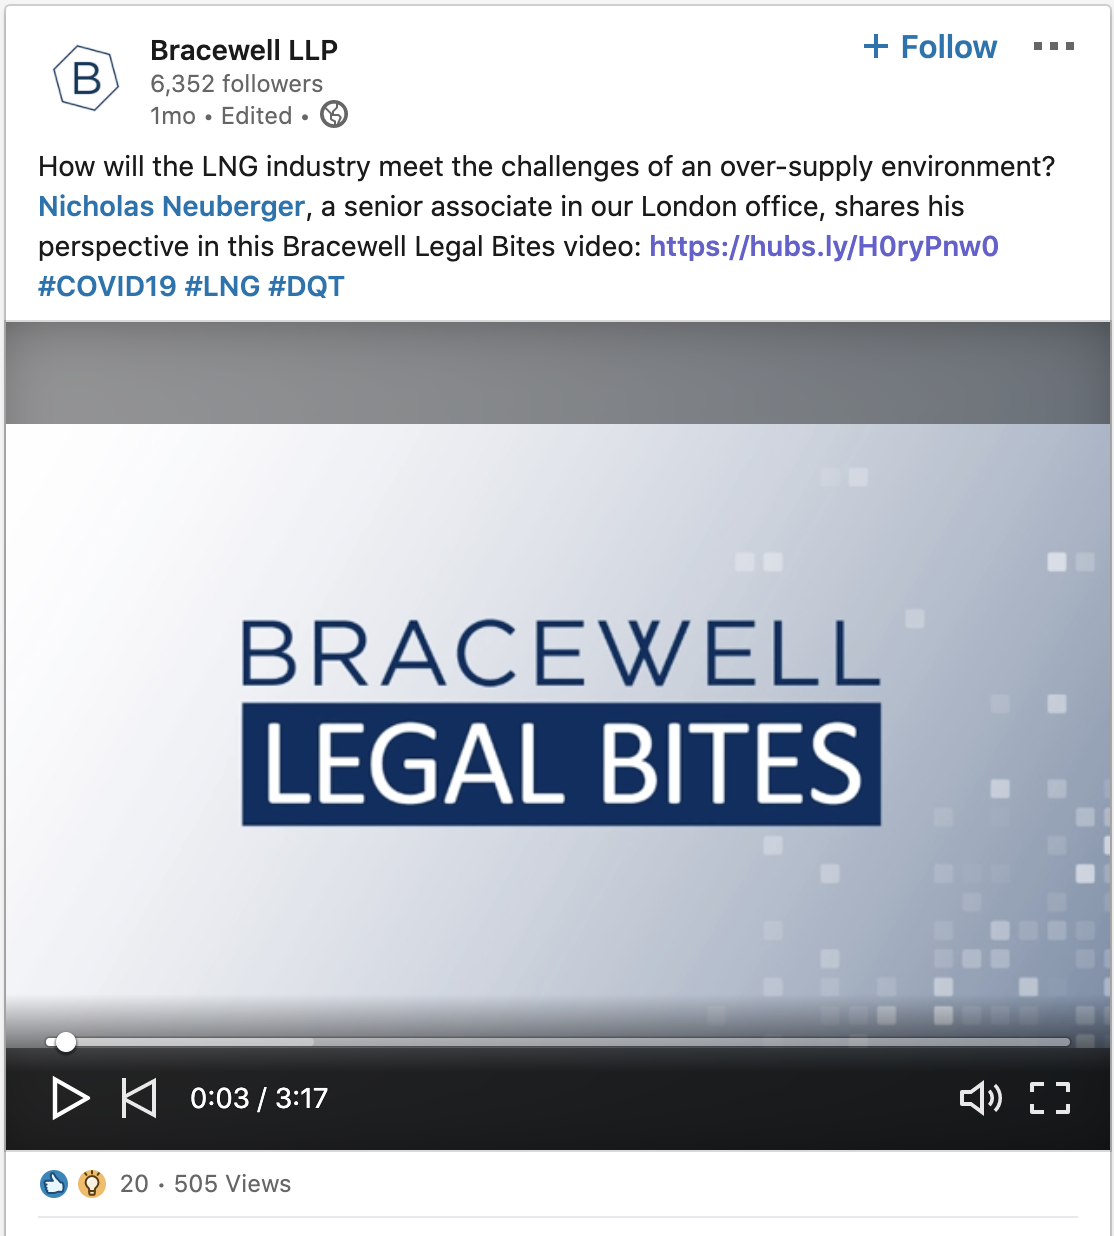 Bracewell LinkedIn Video for Lawyers